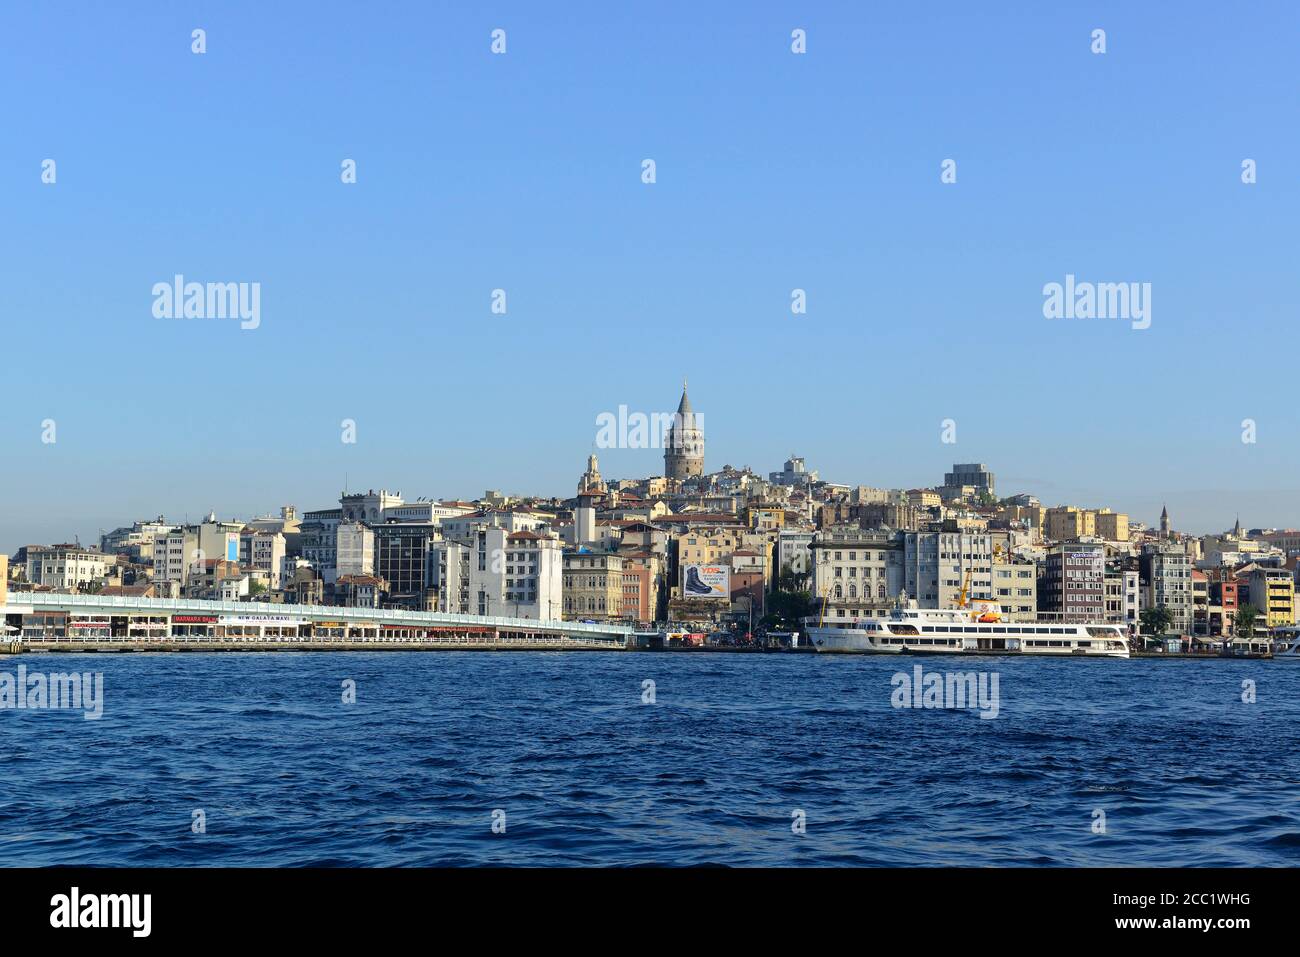 Turkey, Istanbul, View of Galata Bridge and Galata Tower, Beyoglu at Golden Horn Stock Photo